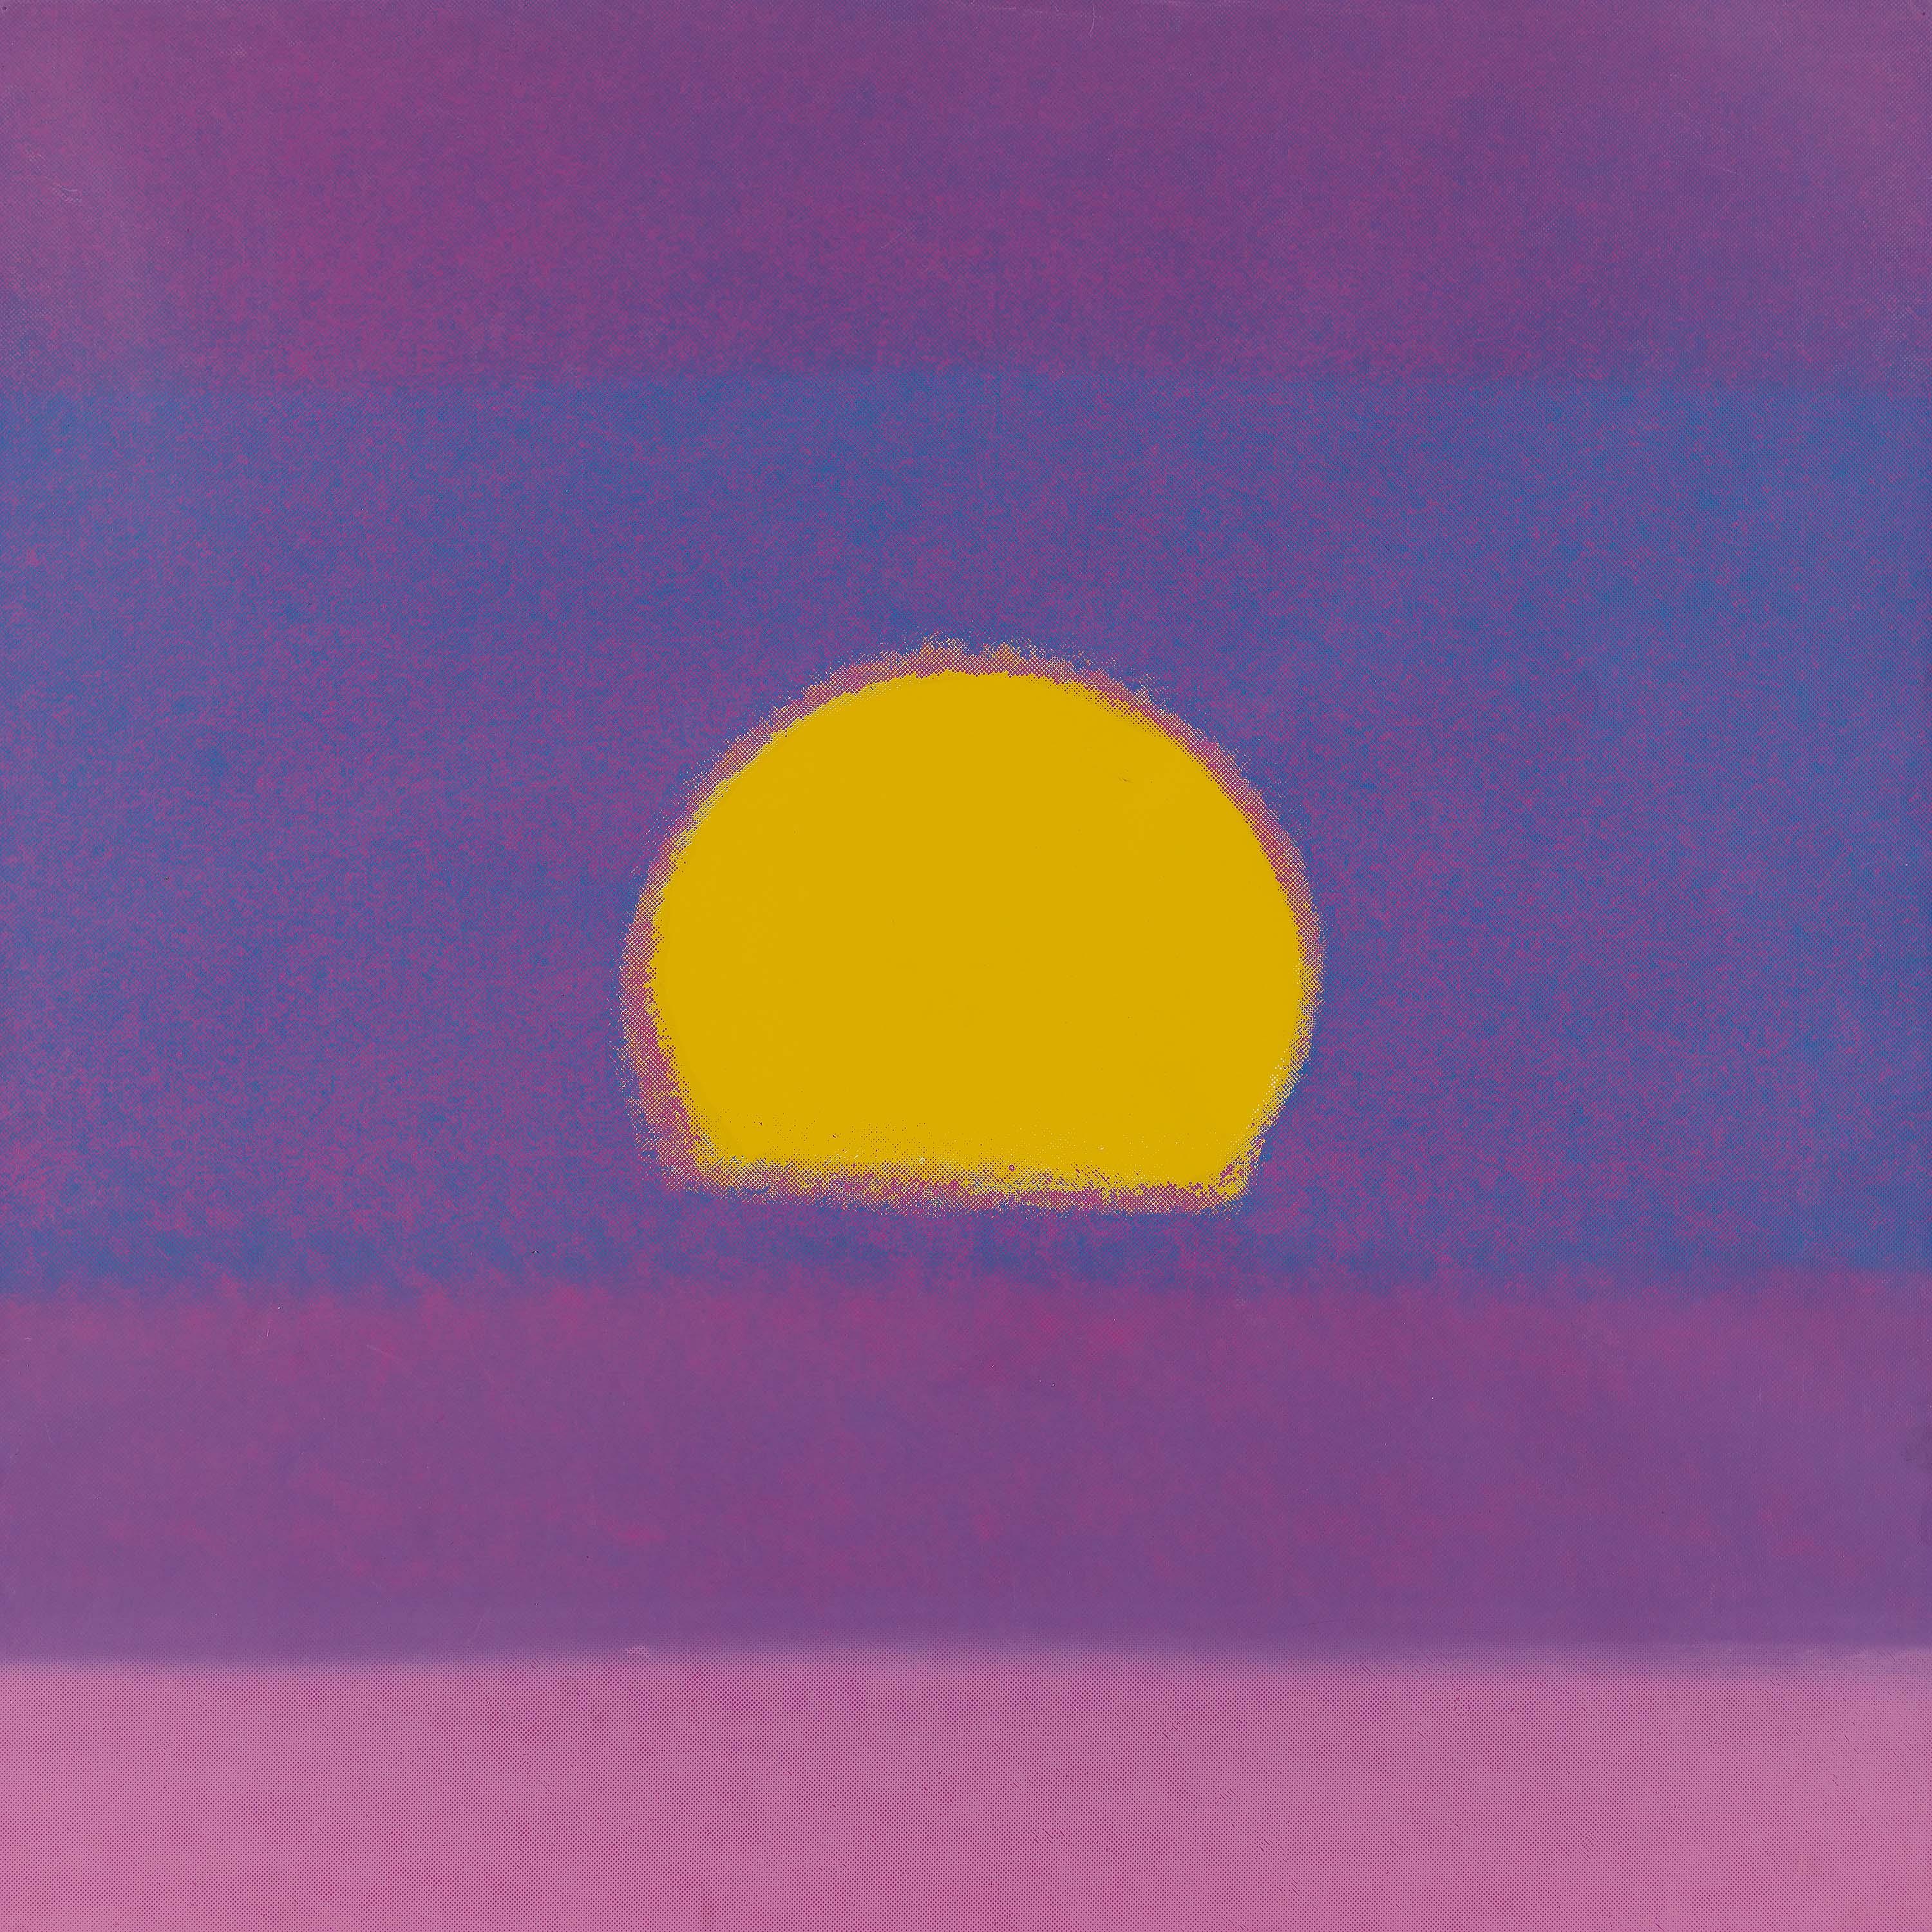 Andy Warhol - Sunset, 73009-1, Van Ham Kunstauktionen